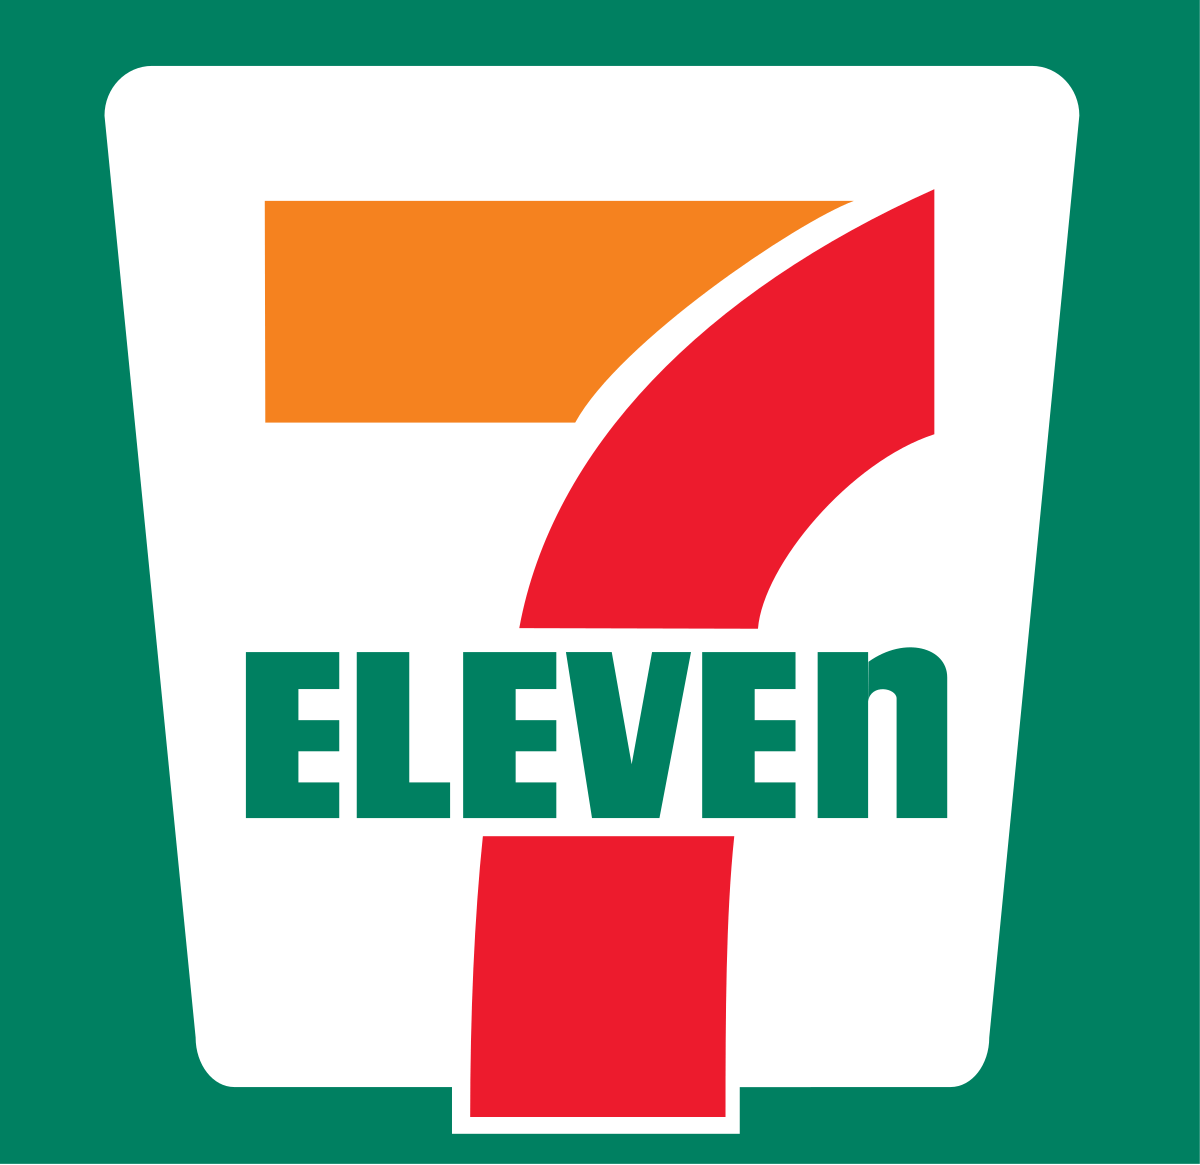 Japanese Corporation Logo - 7 Eleven